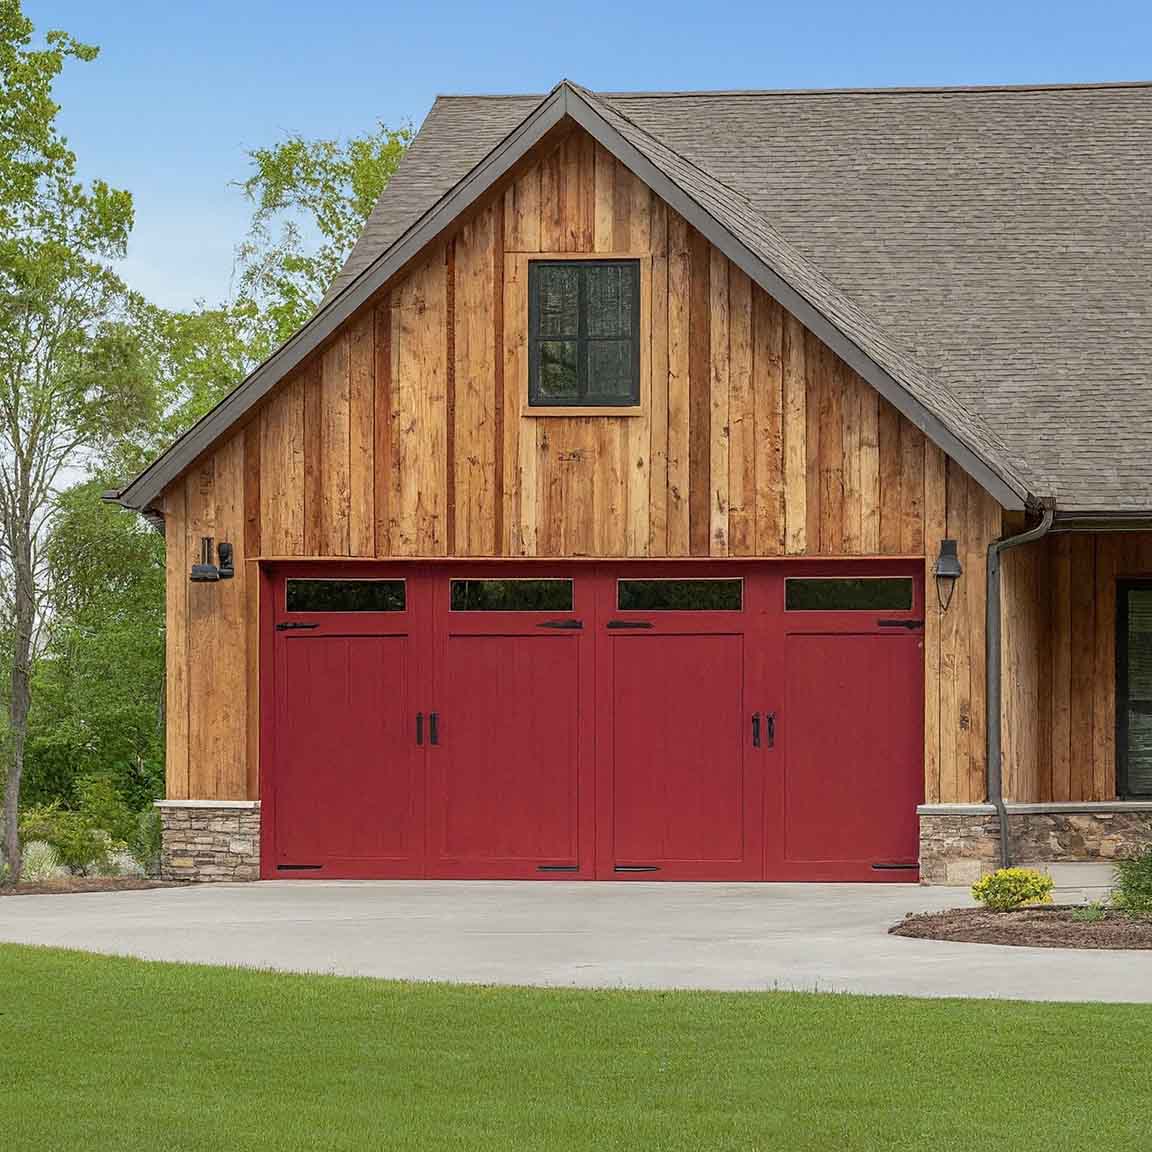 Barn-style Garage Doors on a house